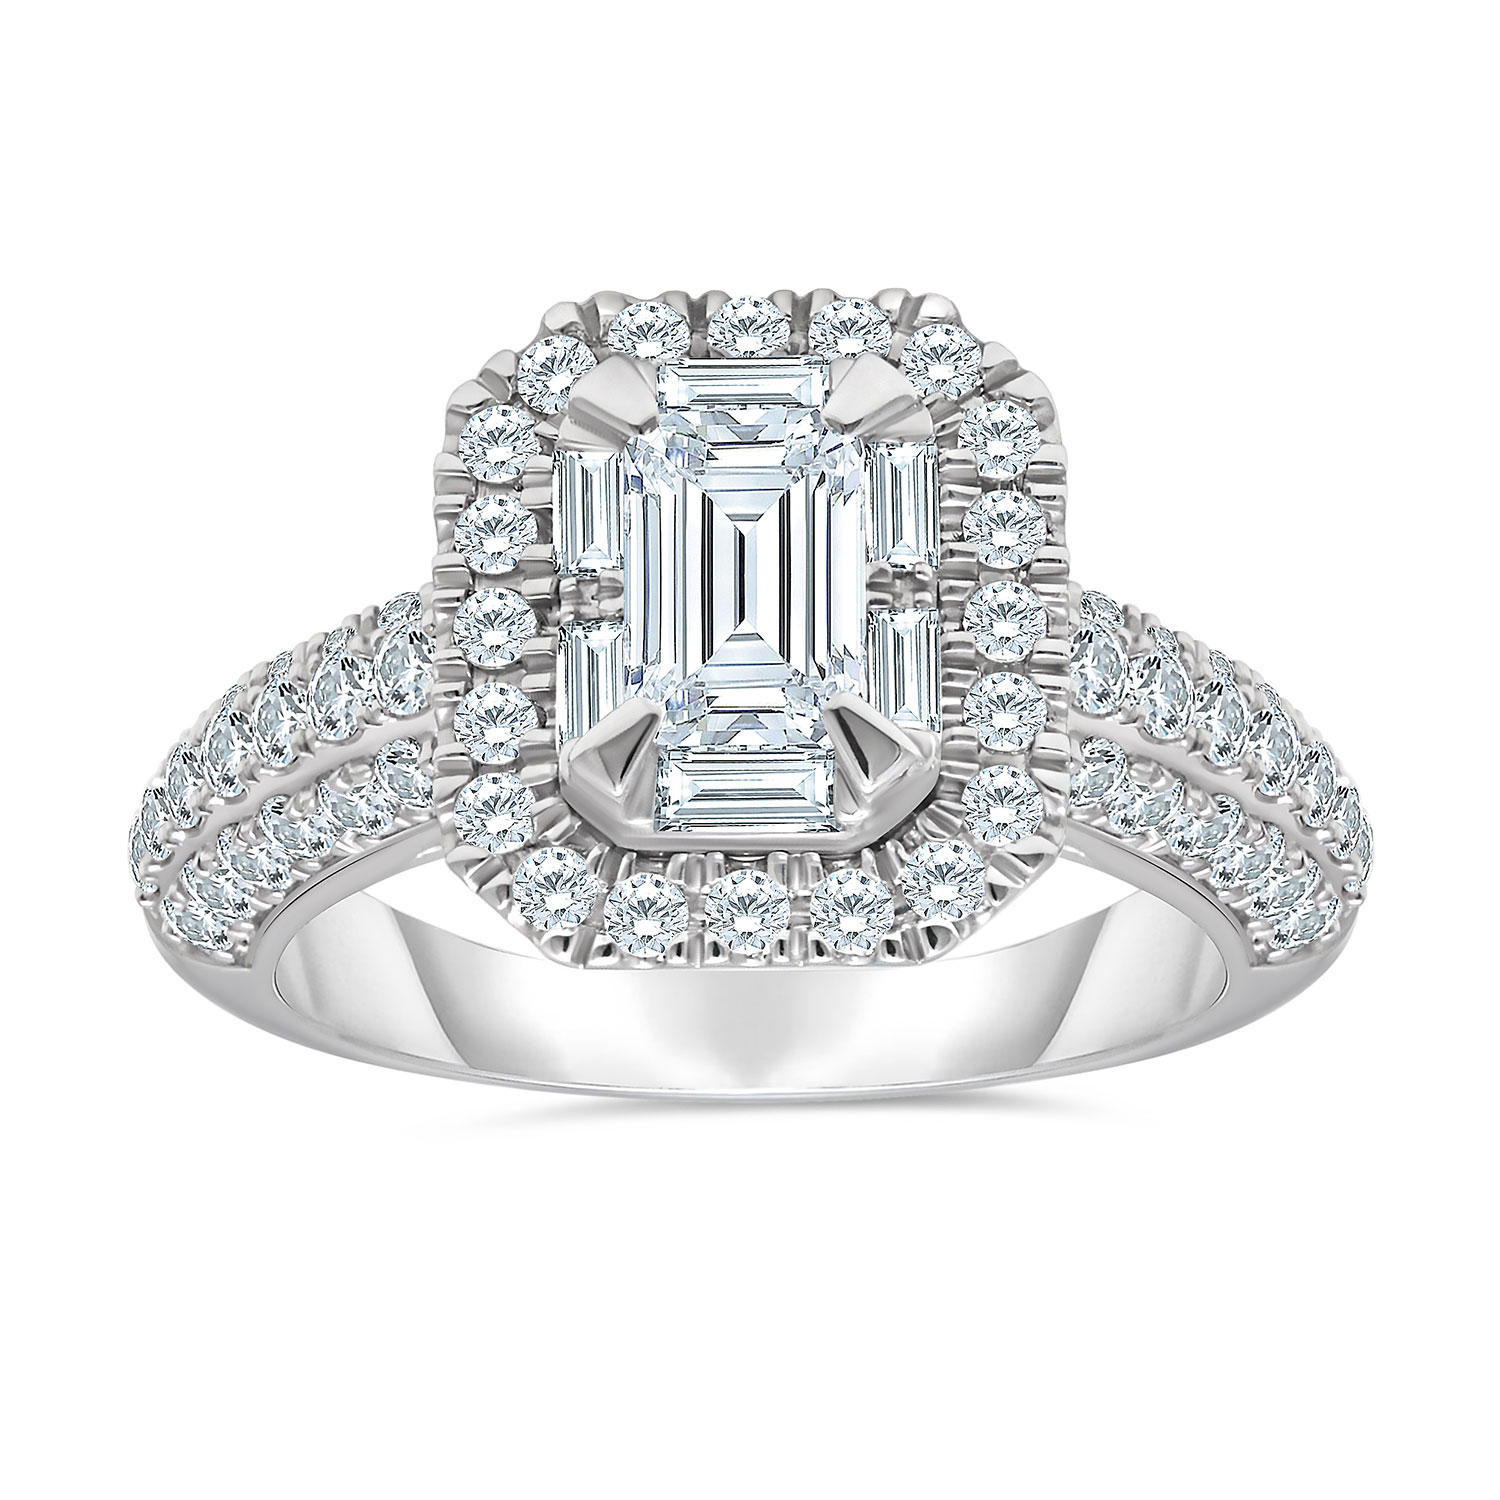 1.45 CT. T.W. Emerald Shape Diamond Ring in 14K White Gold - 8